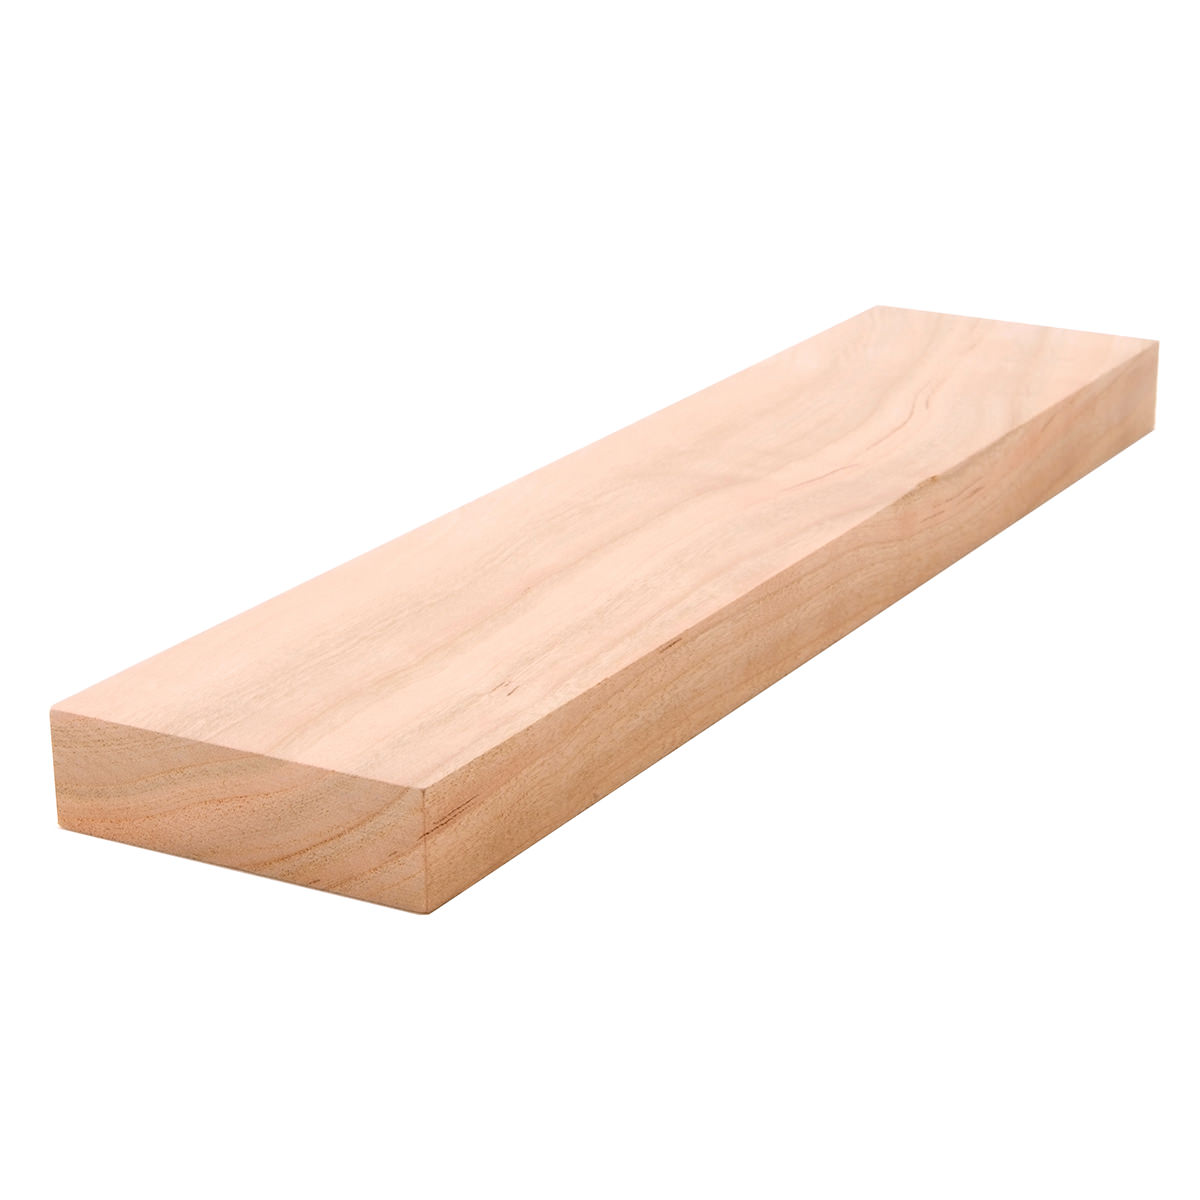 1x3 (3/4" x 21/2") Cherry S4S Lumber, Boards, & Flat